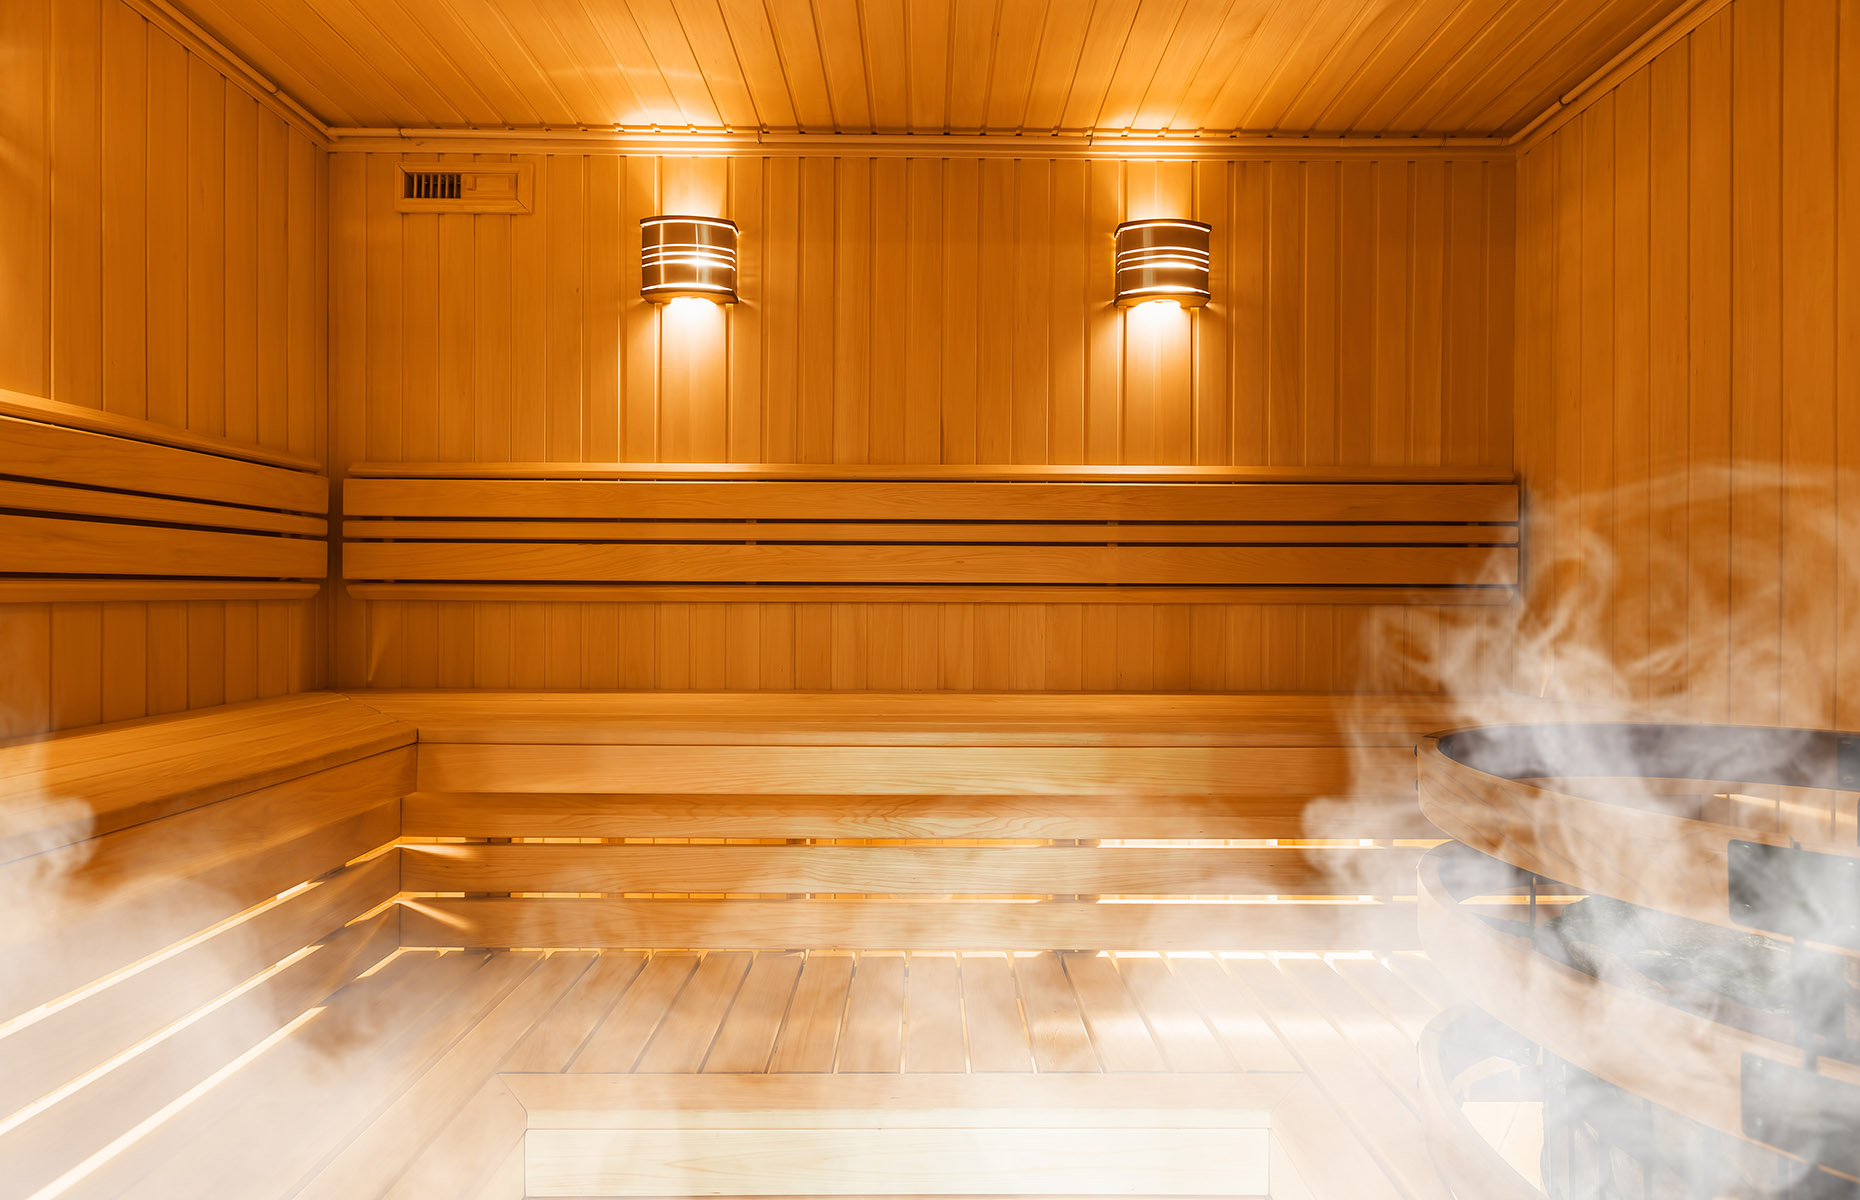 Traditional steam sauna in Finland (Image: Mr. Tempter/Shutterstock)